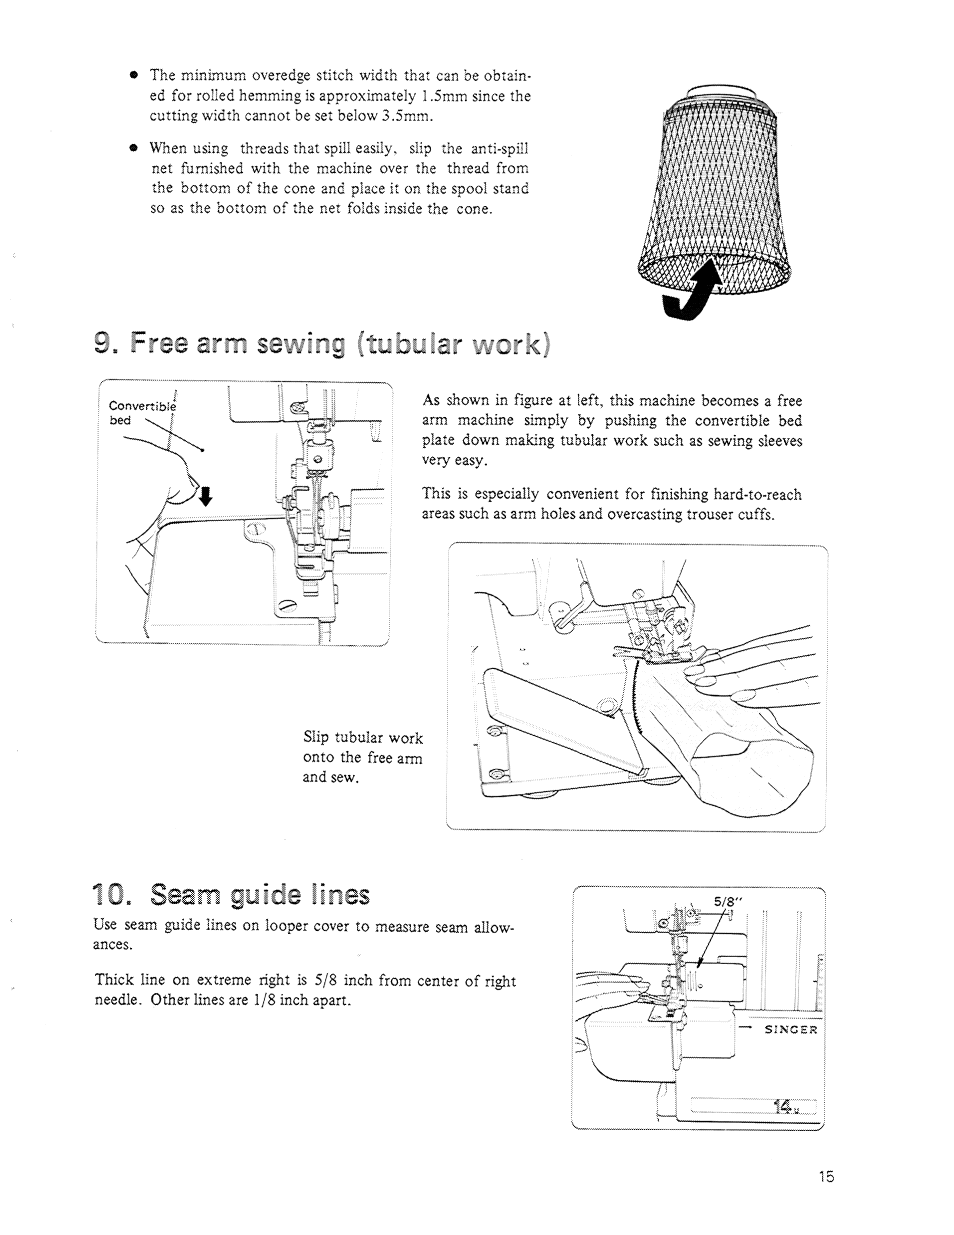 Free arm sewmz vrerki, S .inss | SINGER 14U64A User Manual | Page 17 / 28